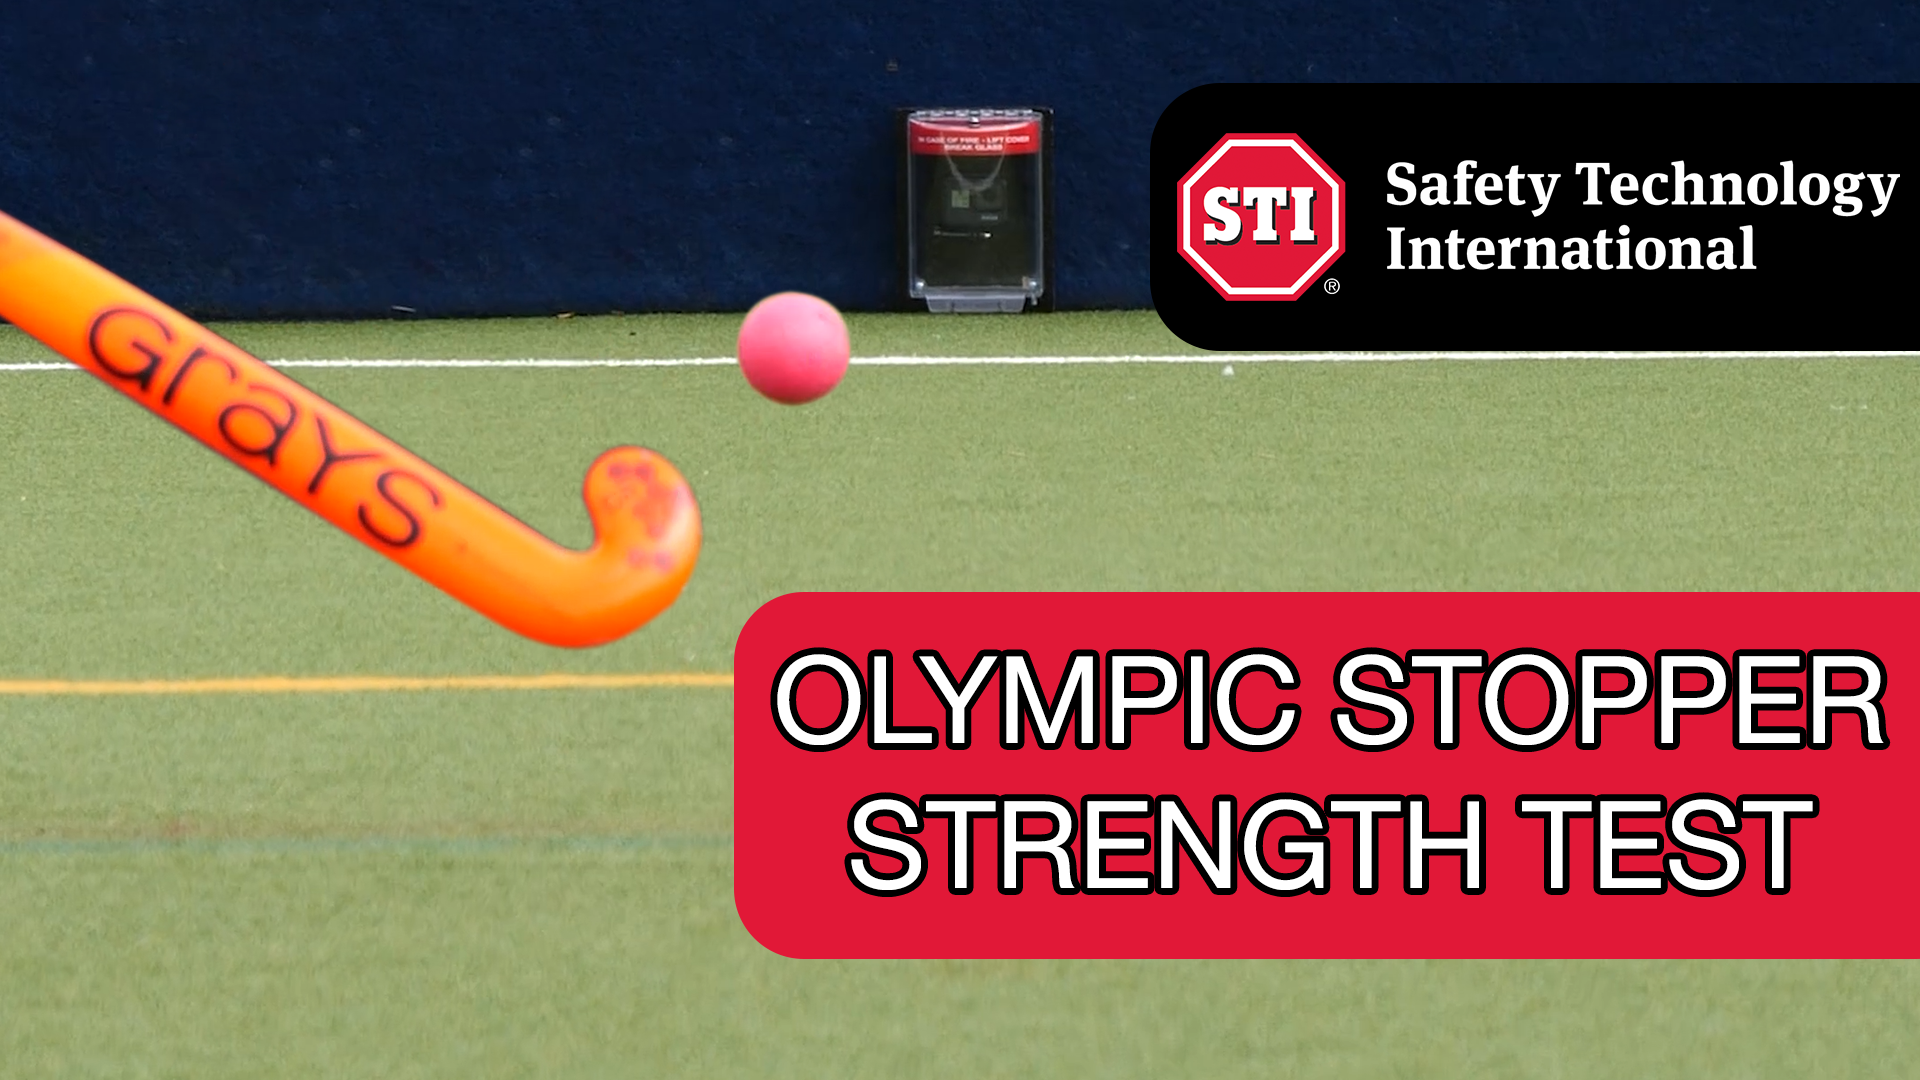 STI's Olympic Stopper Strength Tests